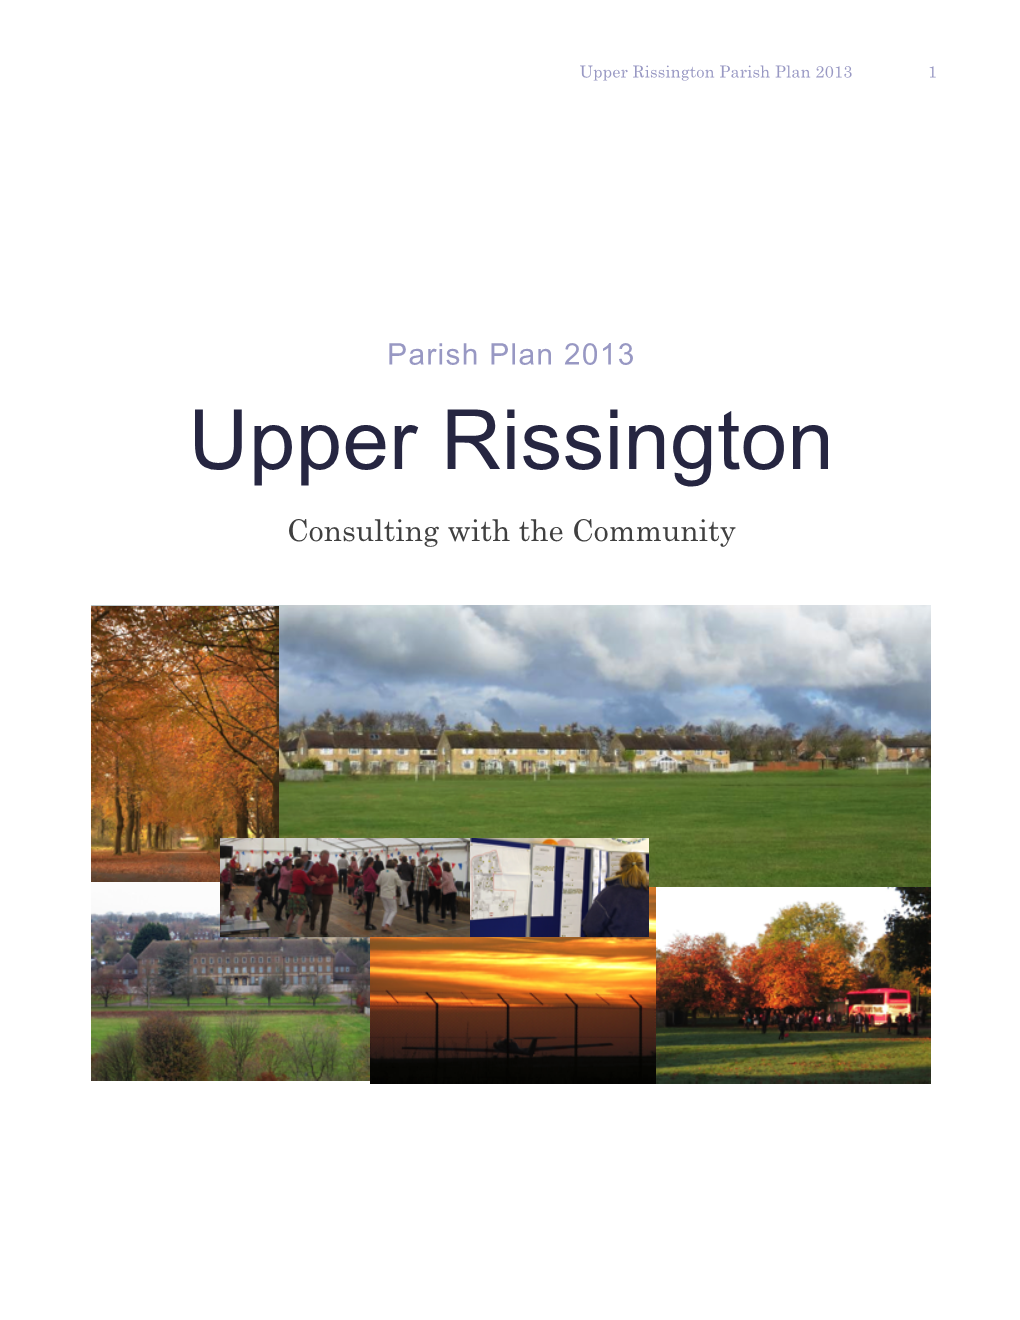 Upper Rissington Parish Plan 2014